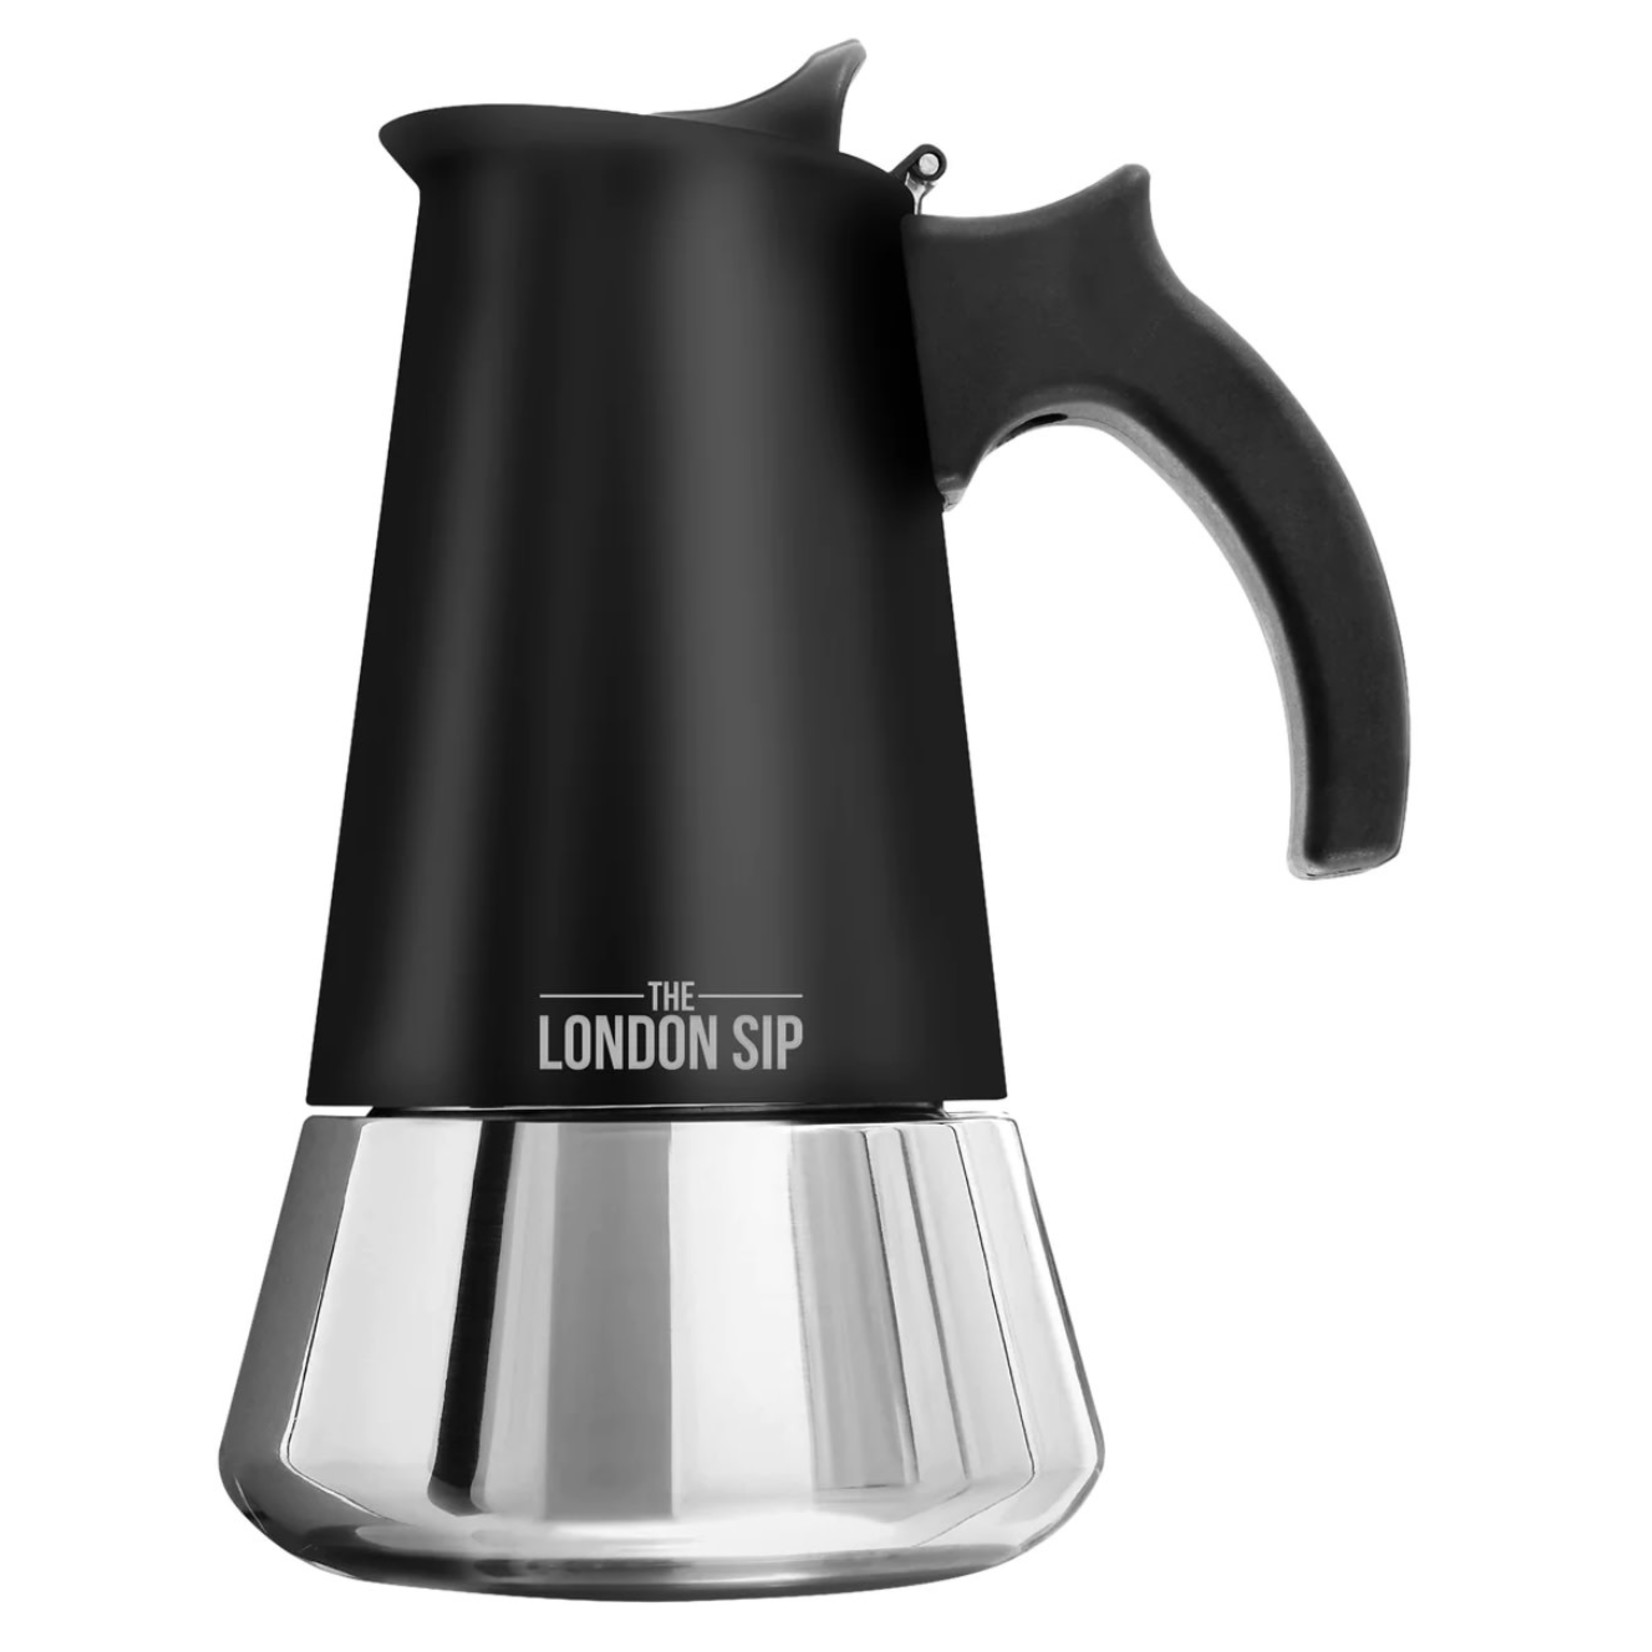 LONDON SIP LONDON SIP Stainless Steel Espresso Maker 3 Cup-Black